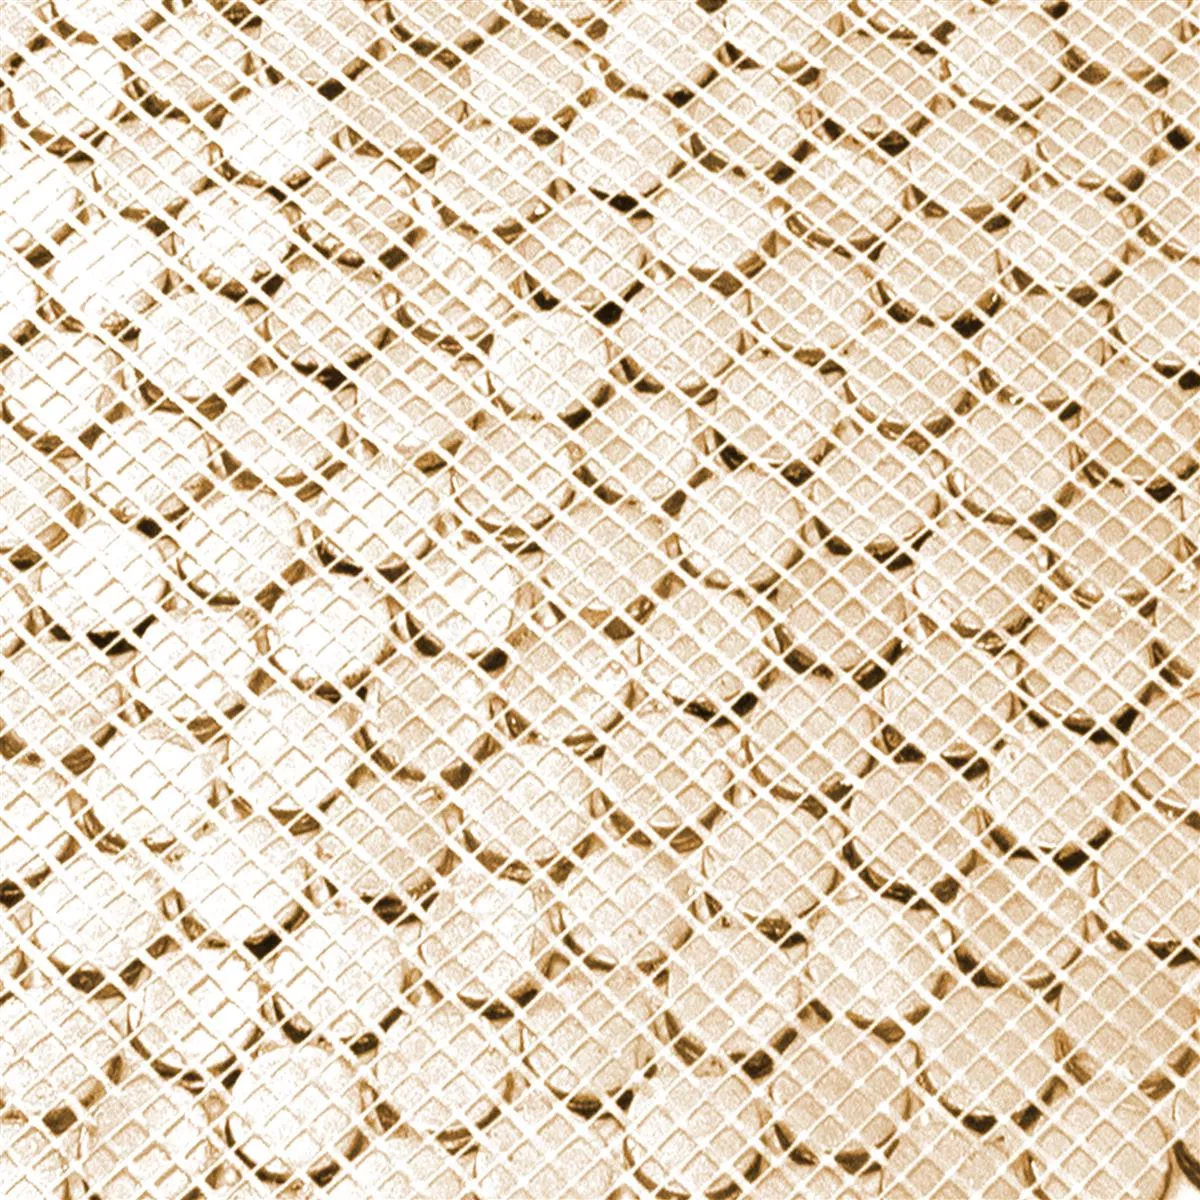 Metall Kupfer Mosaikfliesen Copperfield Knopf